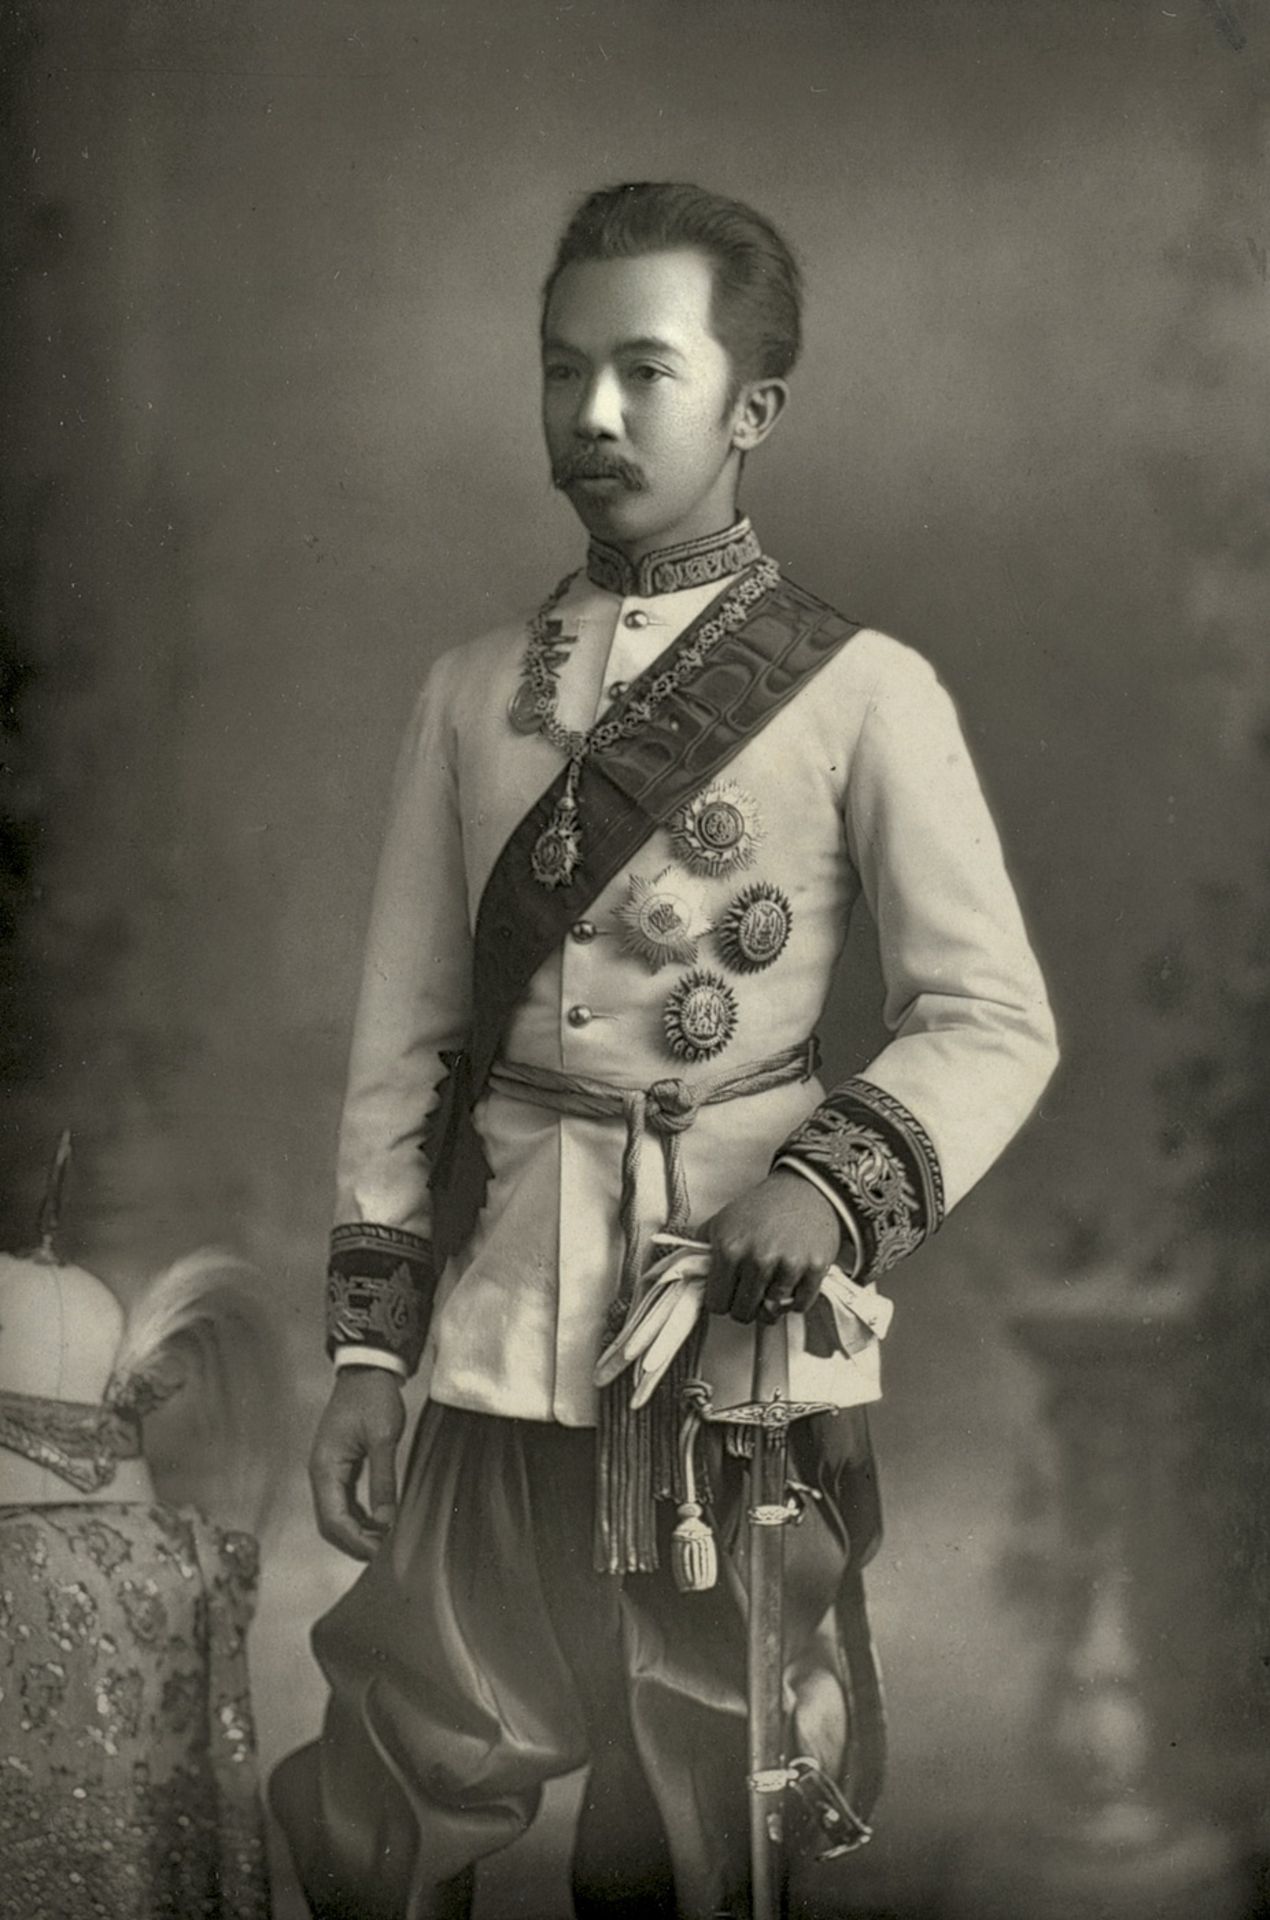 Siam: Prince Damrong RajanubhabPhotographer unknown. Prince Damrong Rajanubhab (1862-1943), the